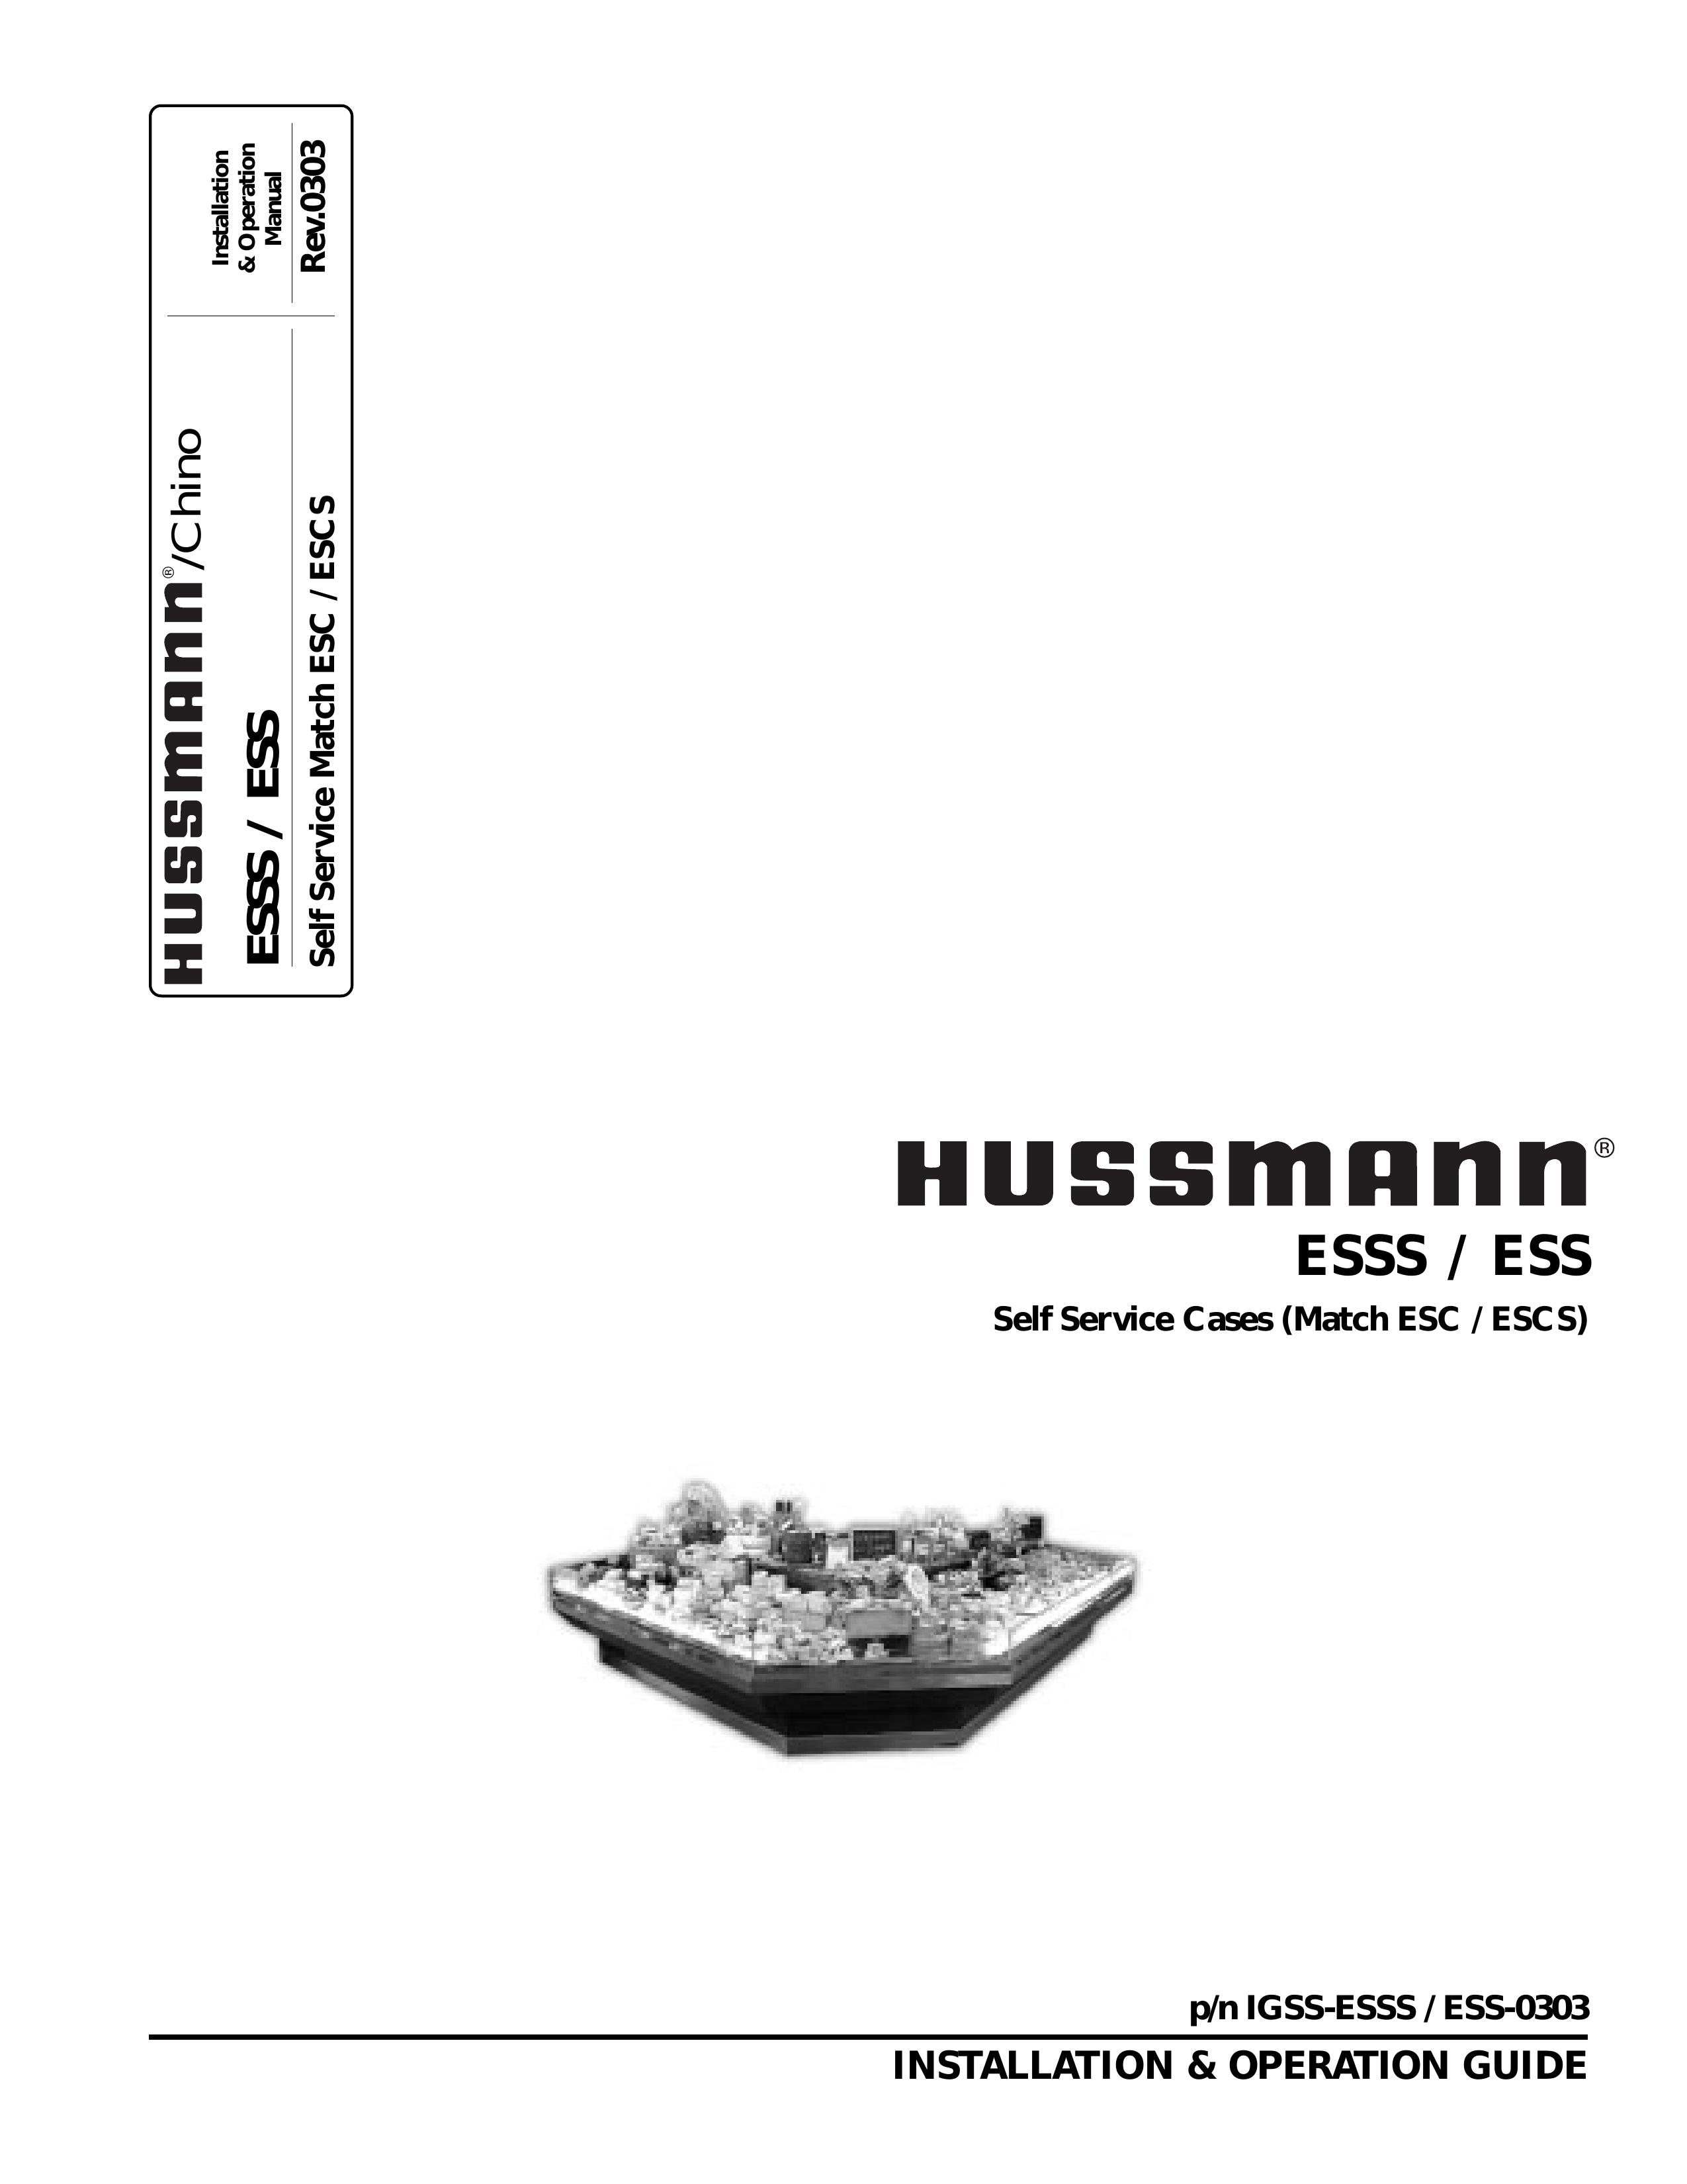 hussman IGSS-ESS Refrigerator User Manual